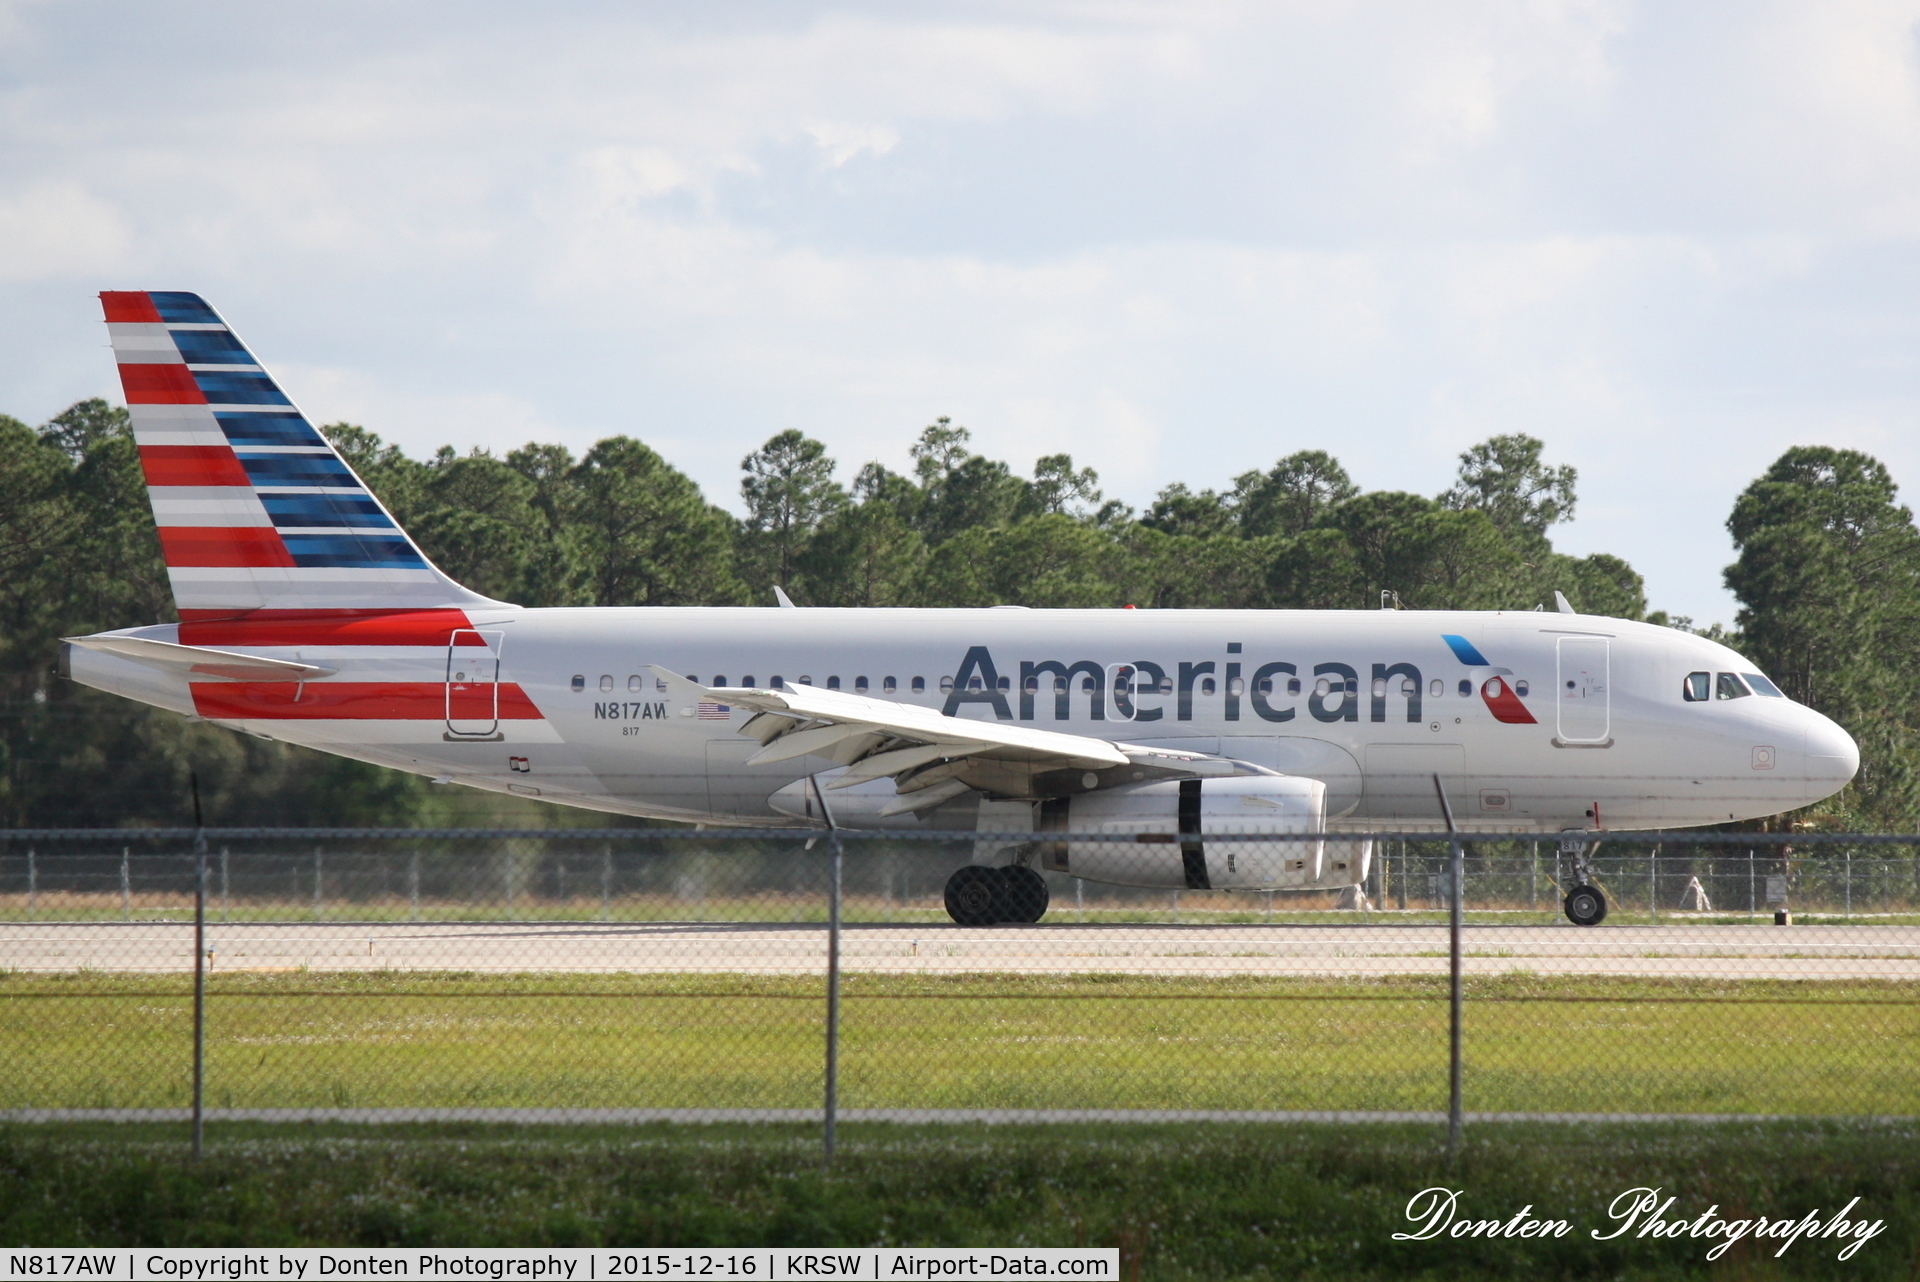 N817AW, 2000 Airbus A319-132 C/N 1373, American Flight 1839 (N817AW) arrives at Southwest Florida International Airport following flight from Philadelphia International Airport